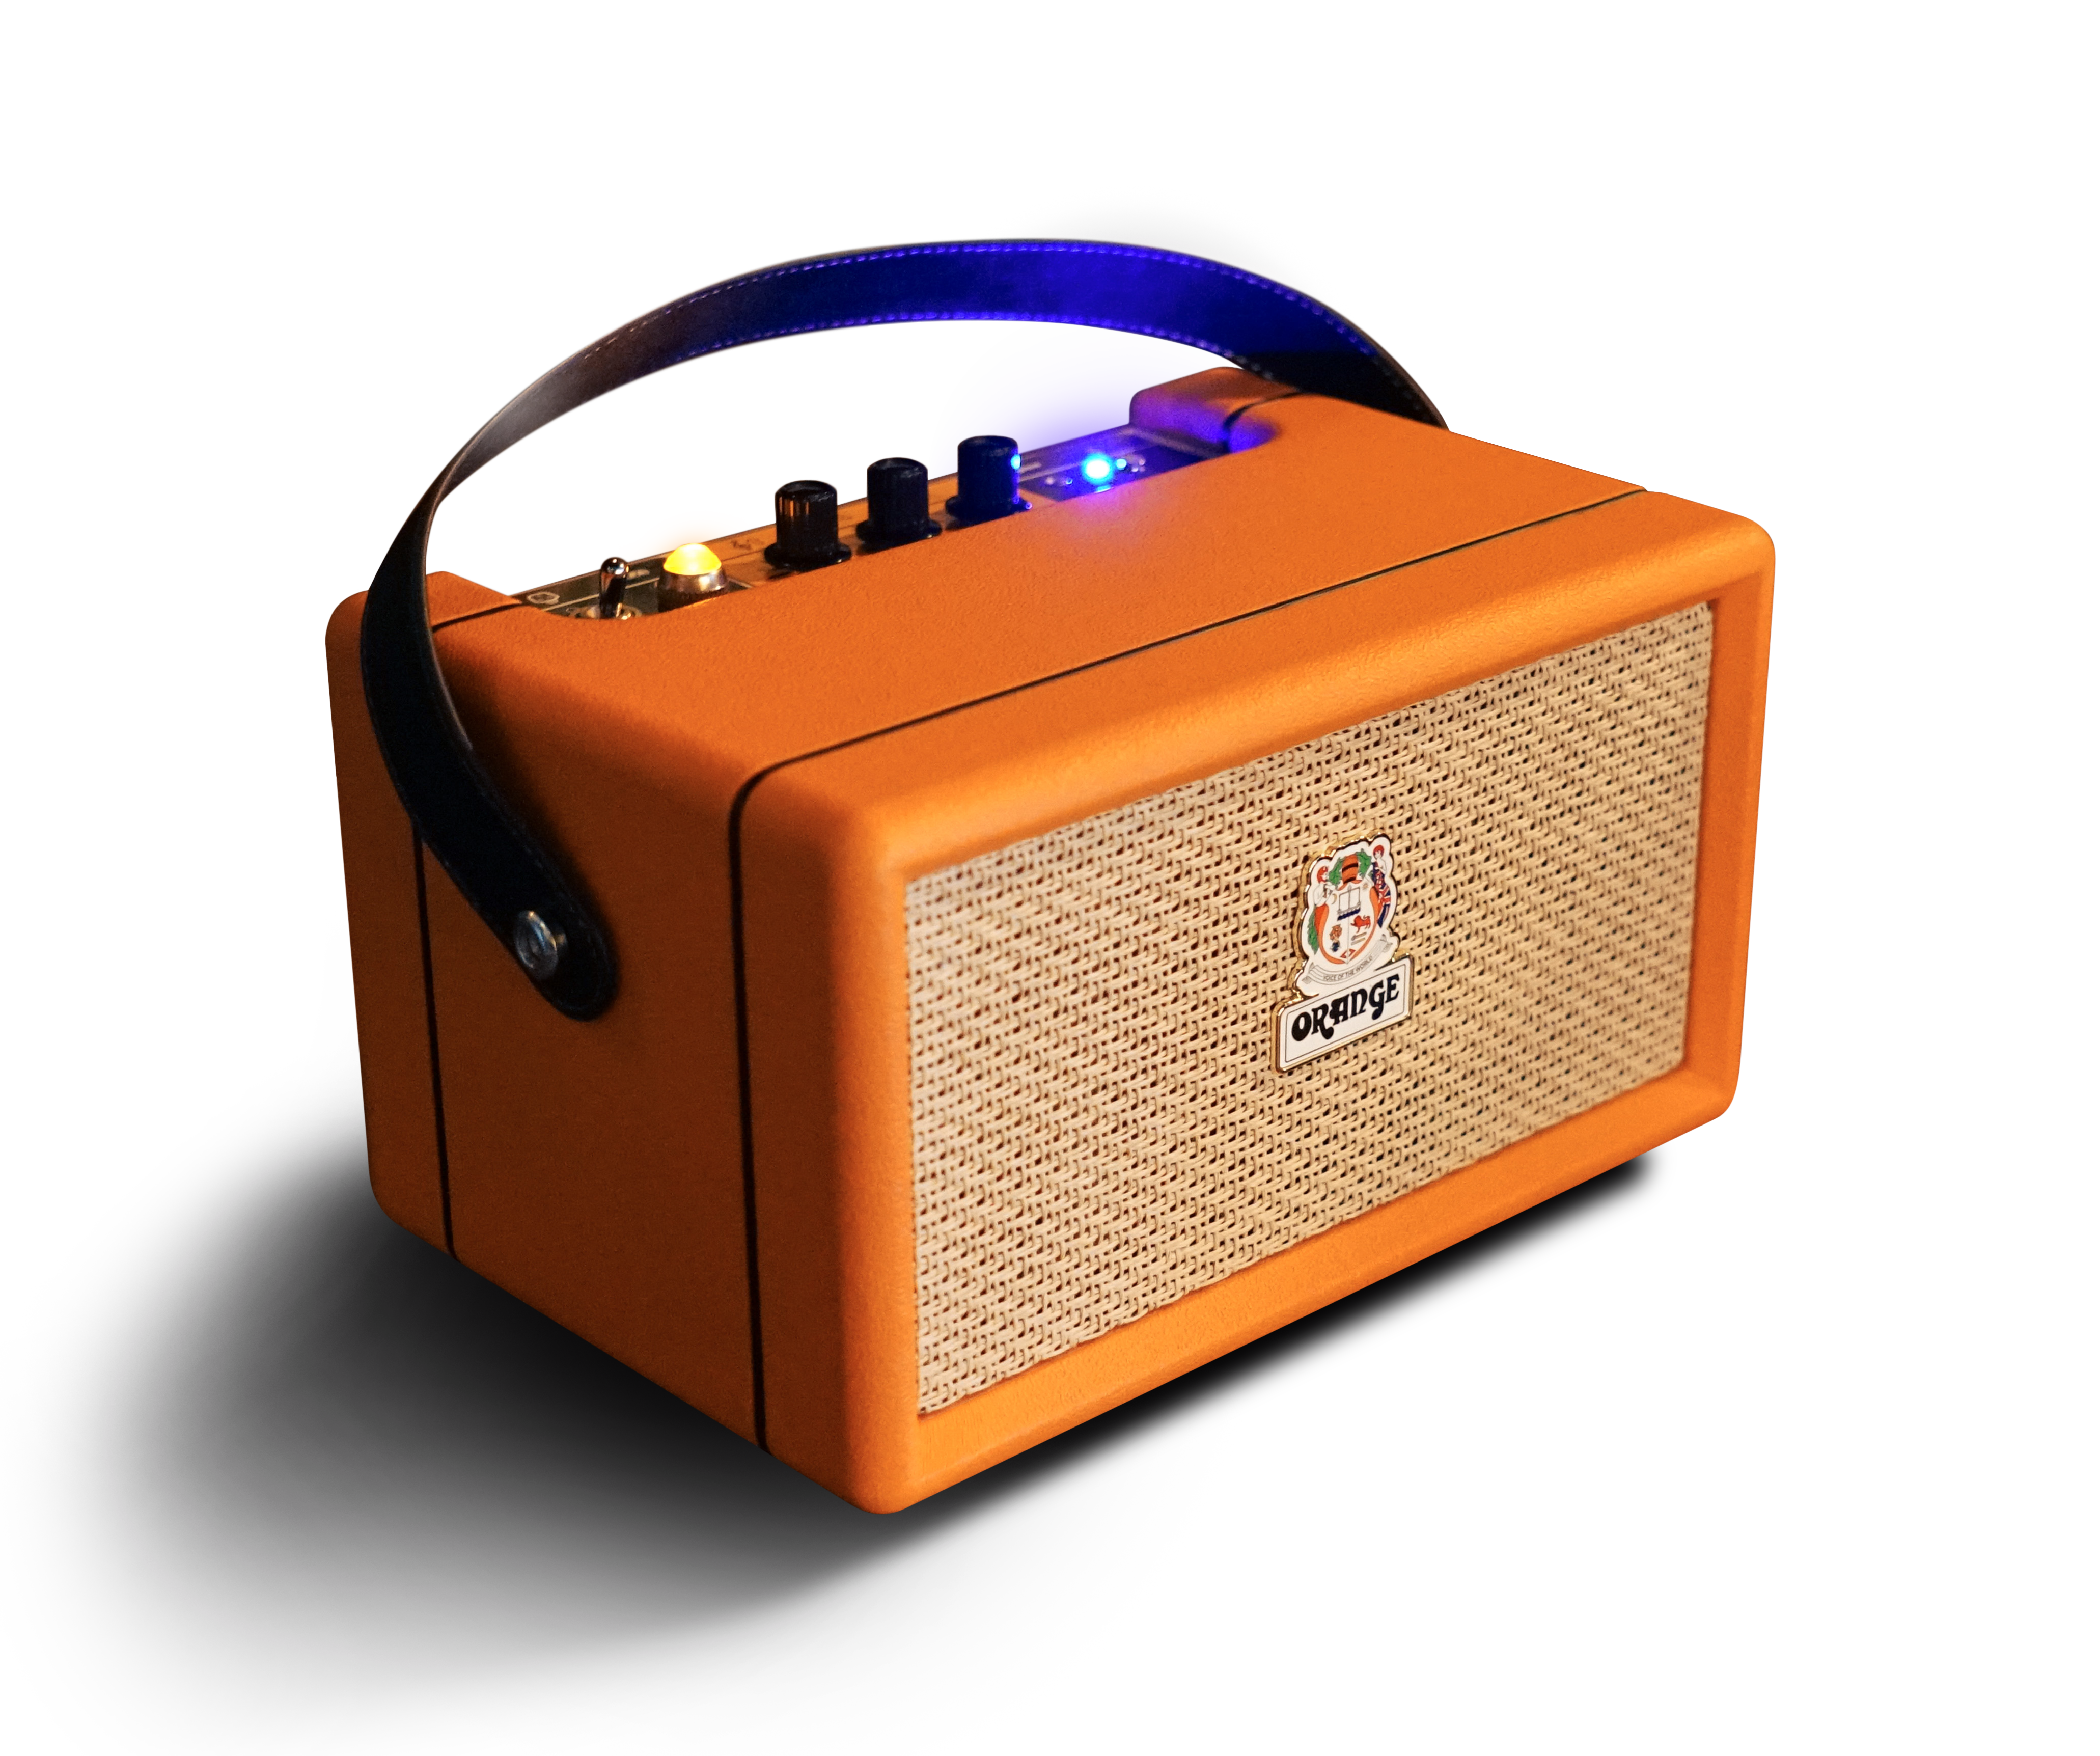 Orange Box – Orange Amps